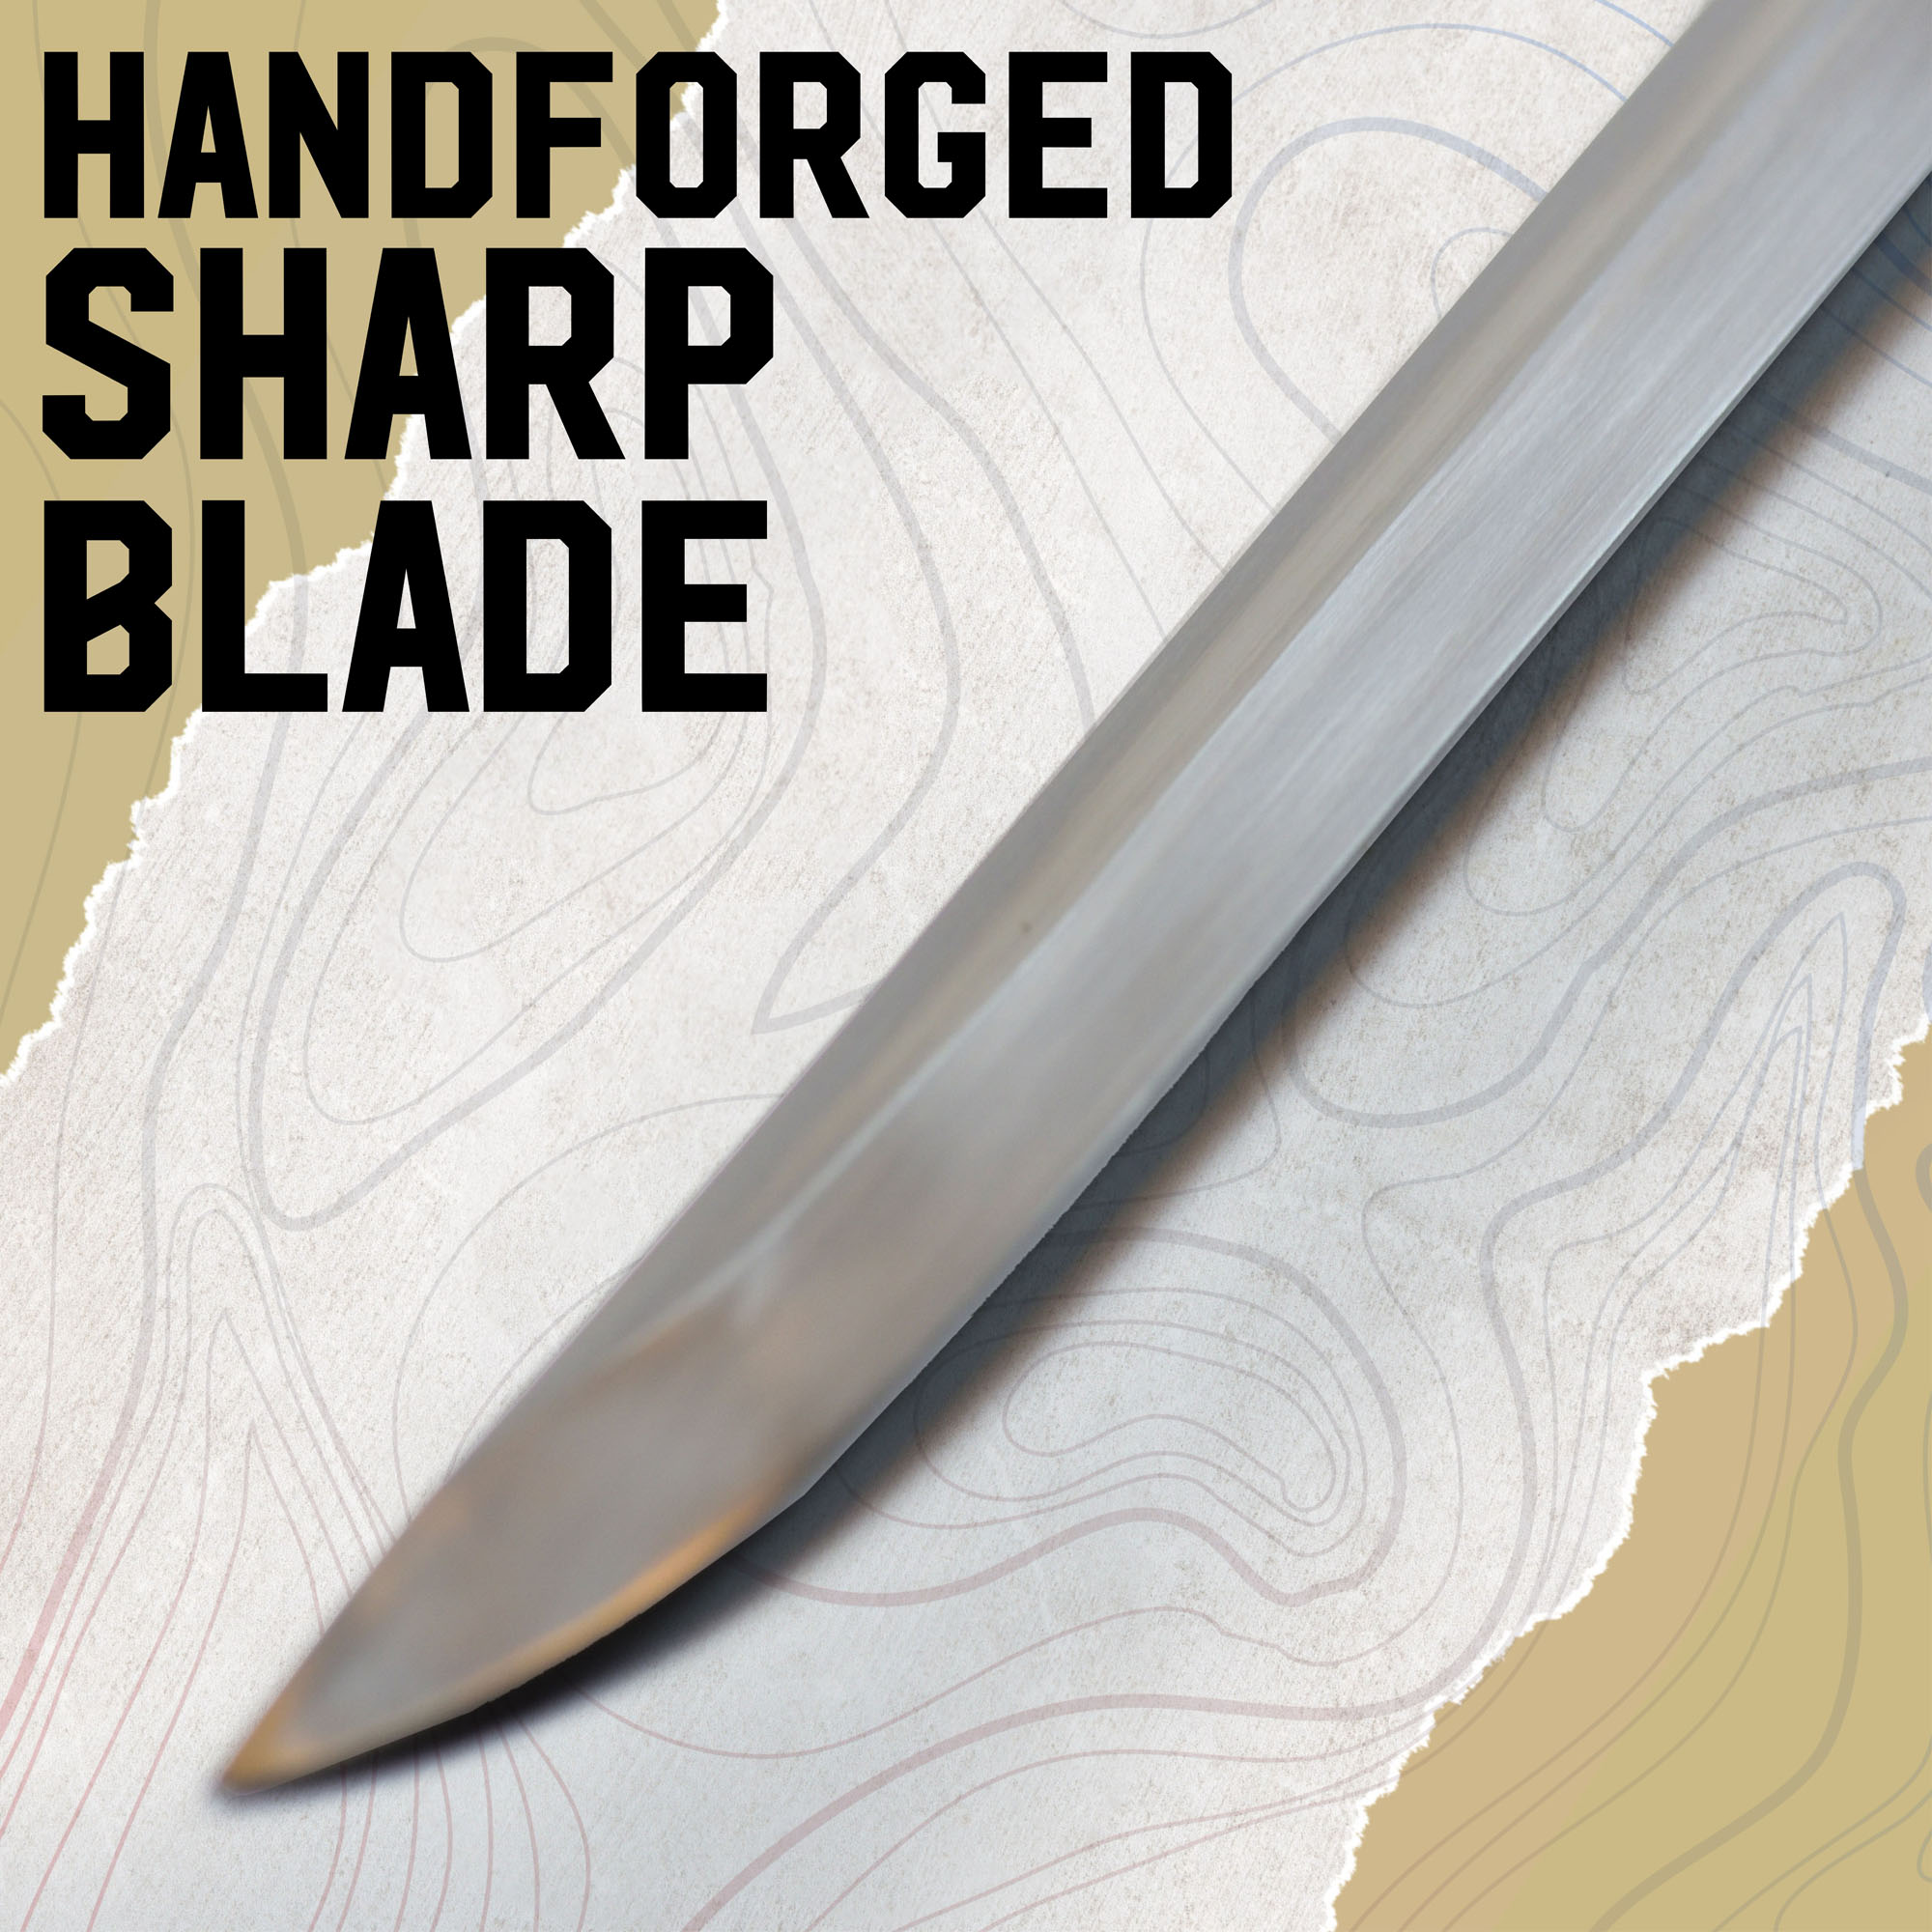 Nodachi sword with handforged sharp blade